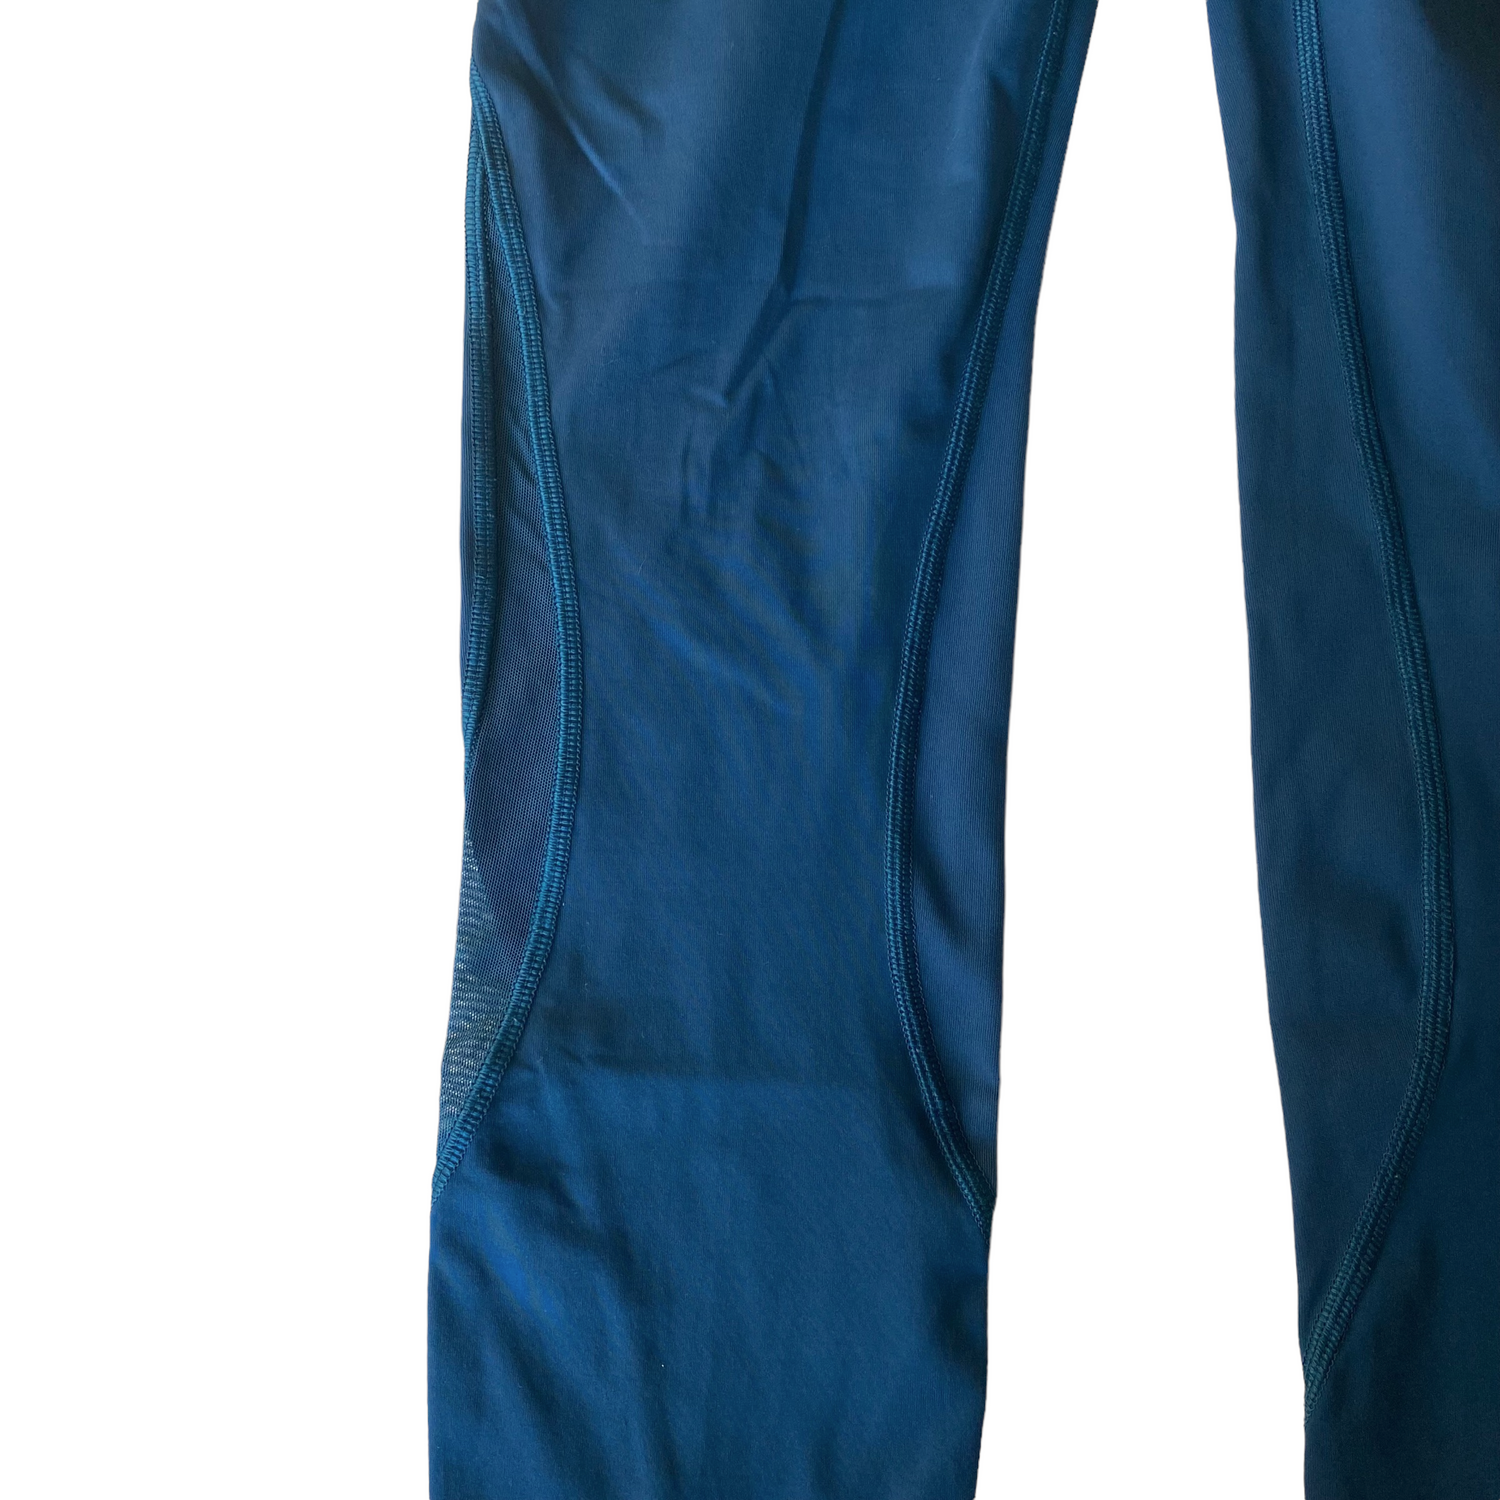 Rare Lululemon Invigorate 7/8 Tight Leggings Front Zip Pockets Sheer Detail Size 6 - Love it again boutique